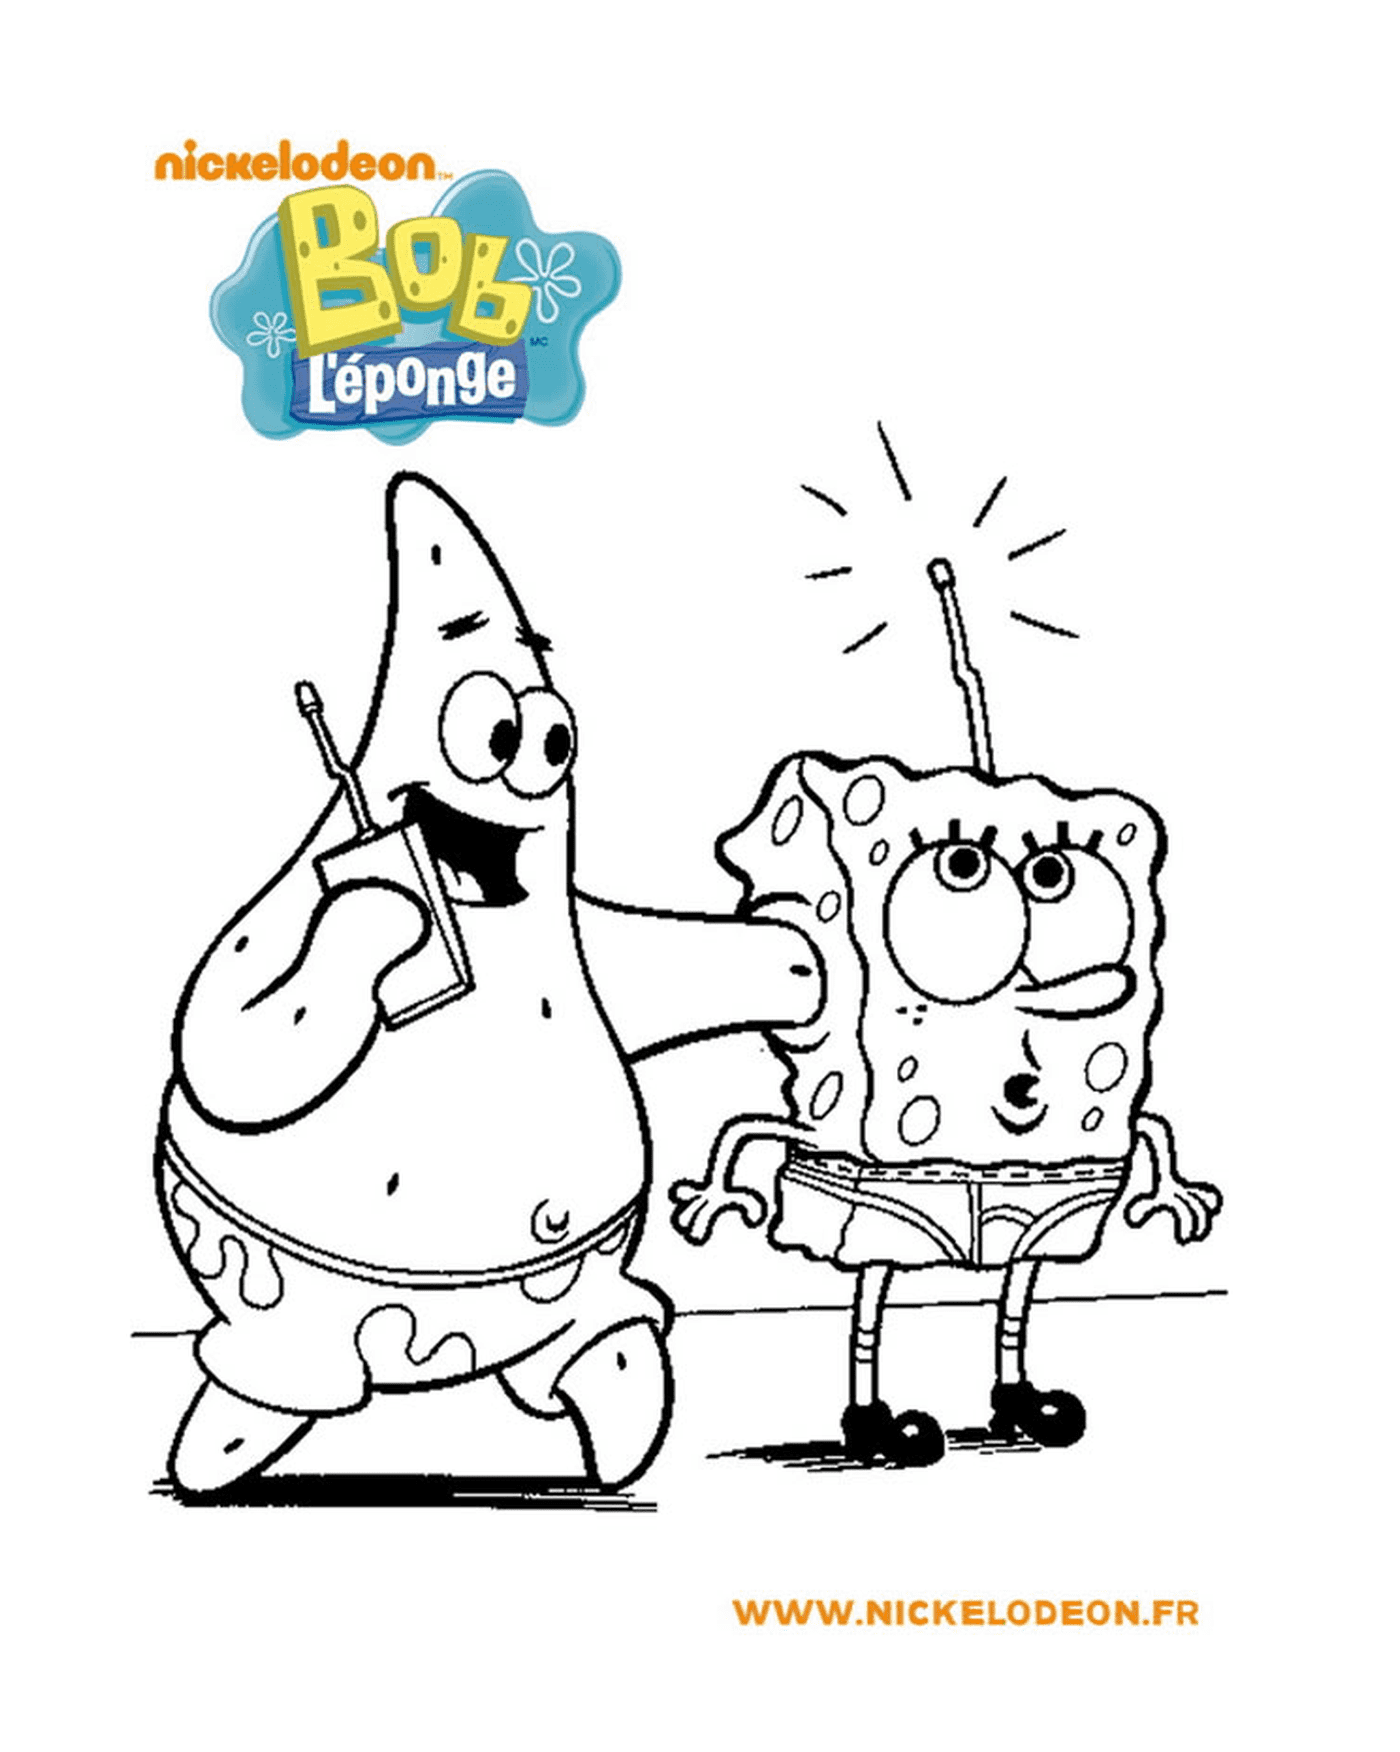  Spongebob und Patrick 